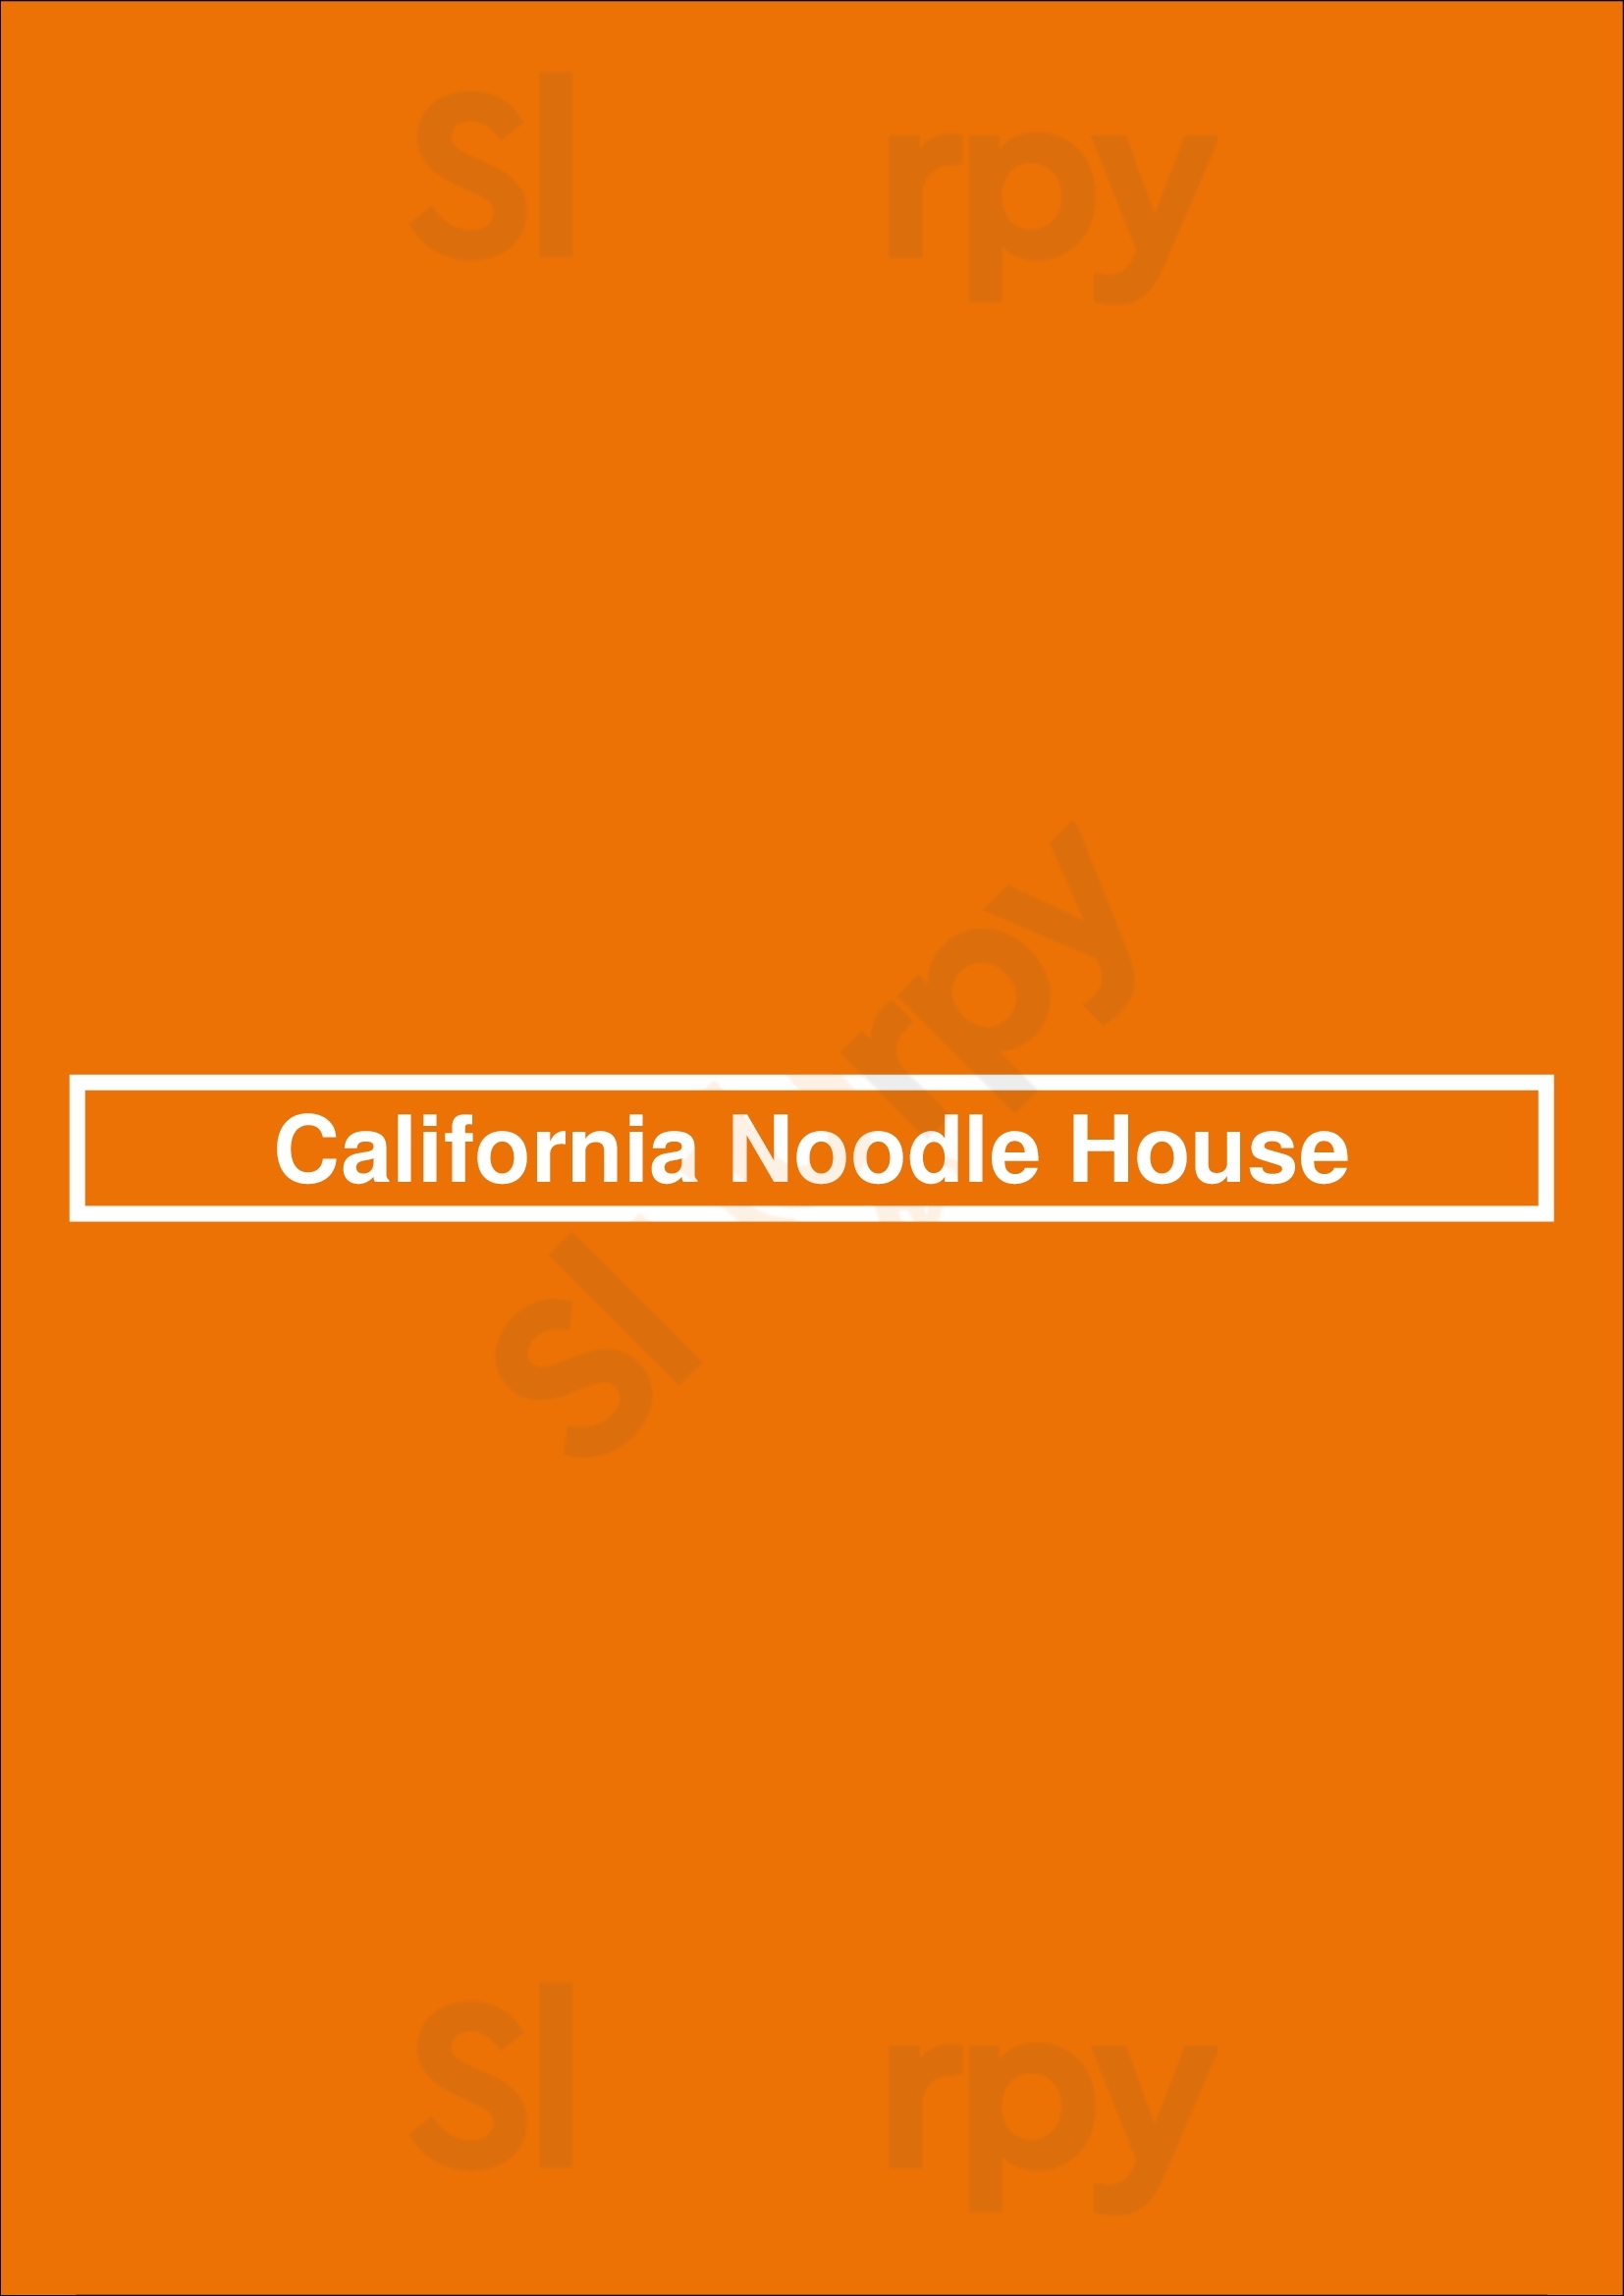 California Noodle House Las Vegas Menu - 1